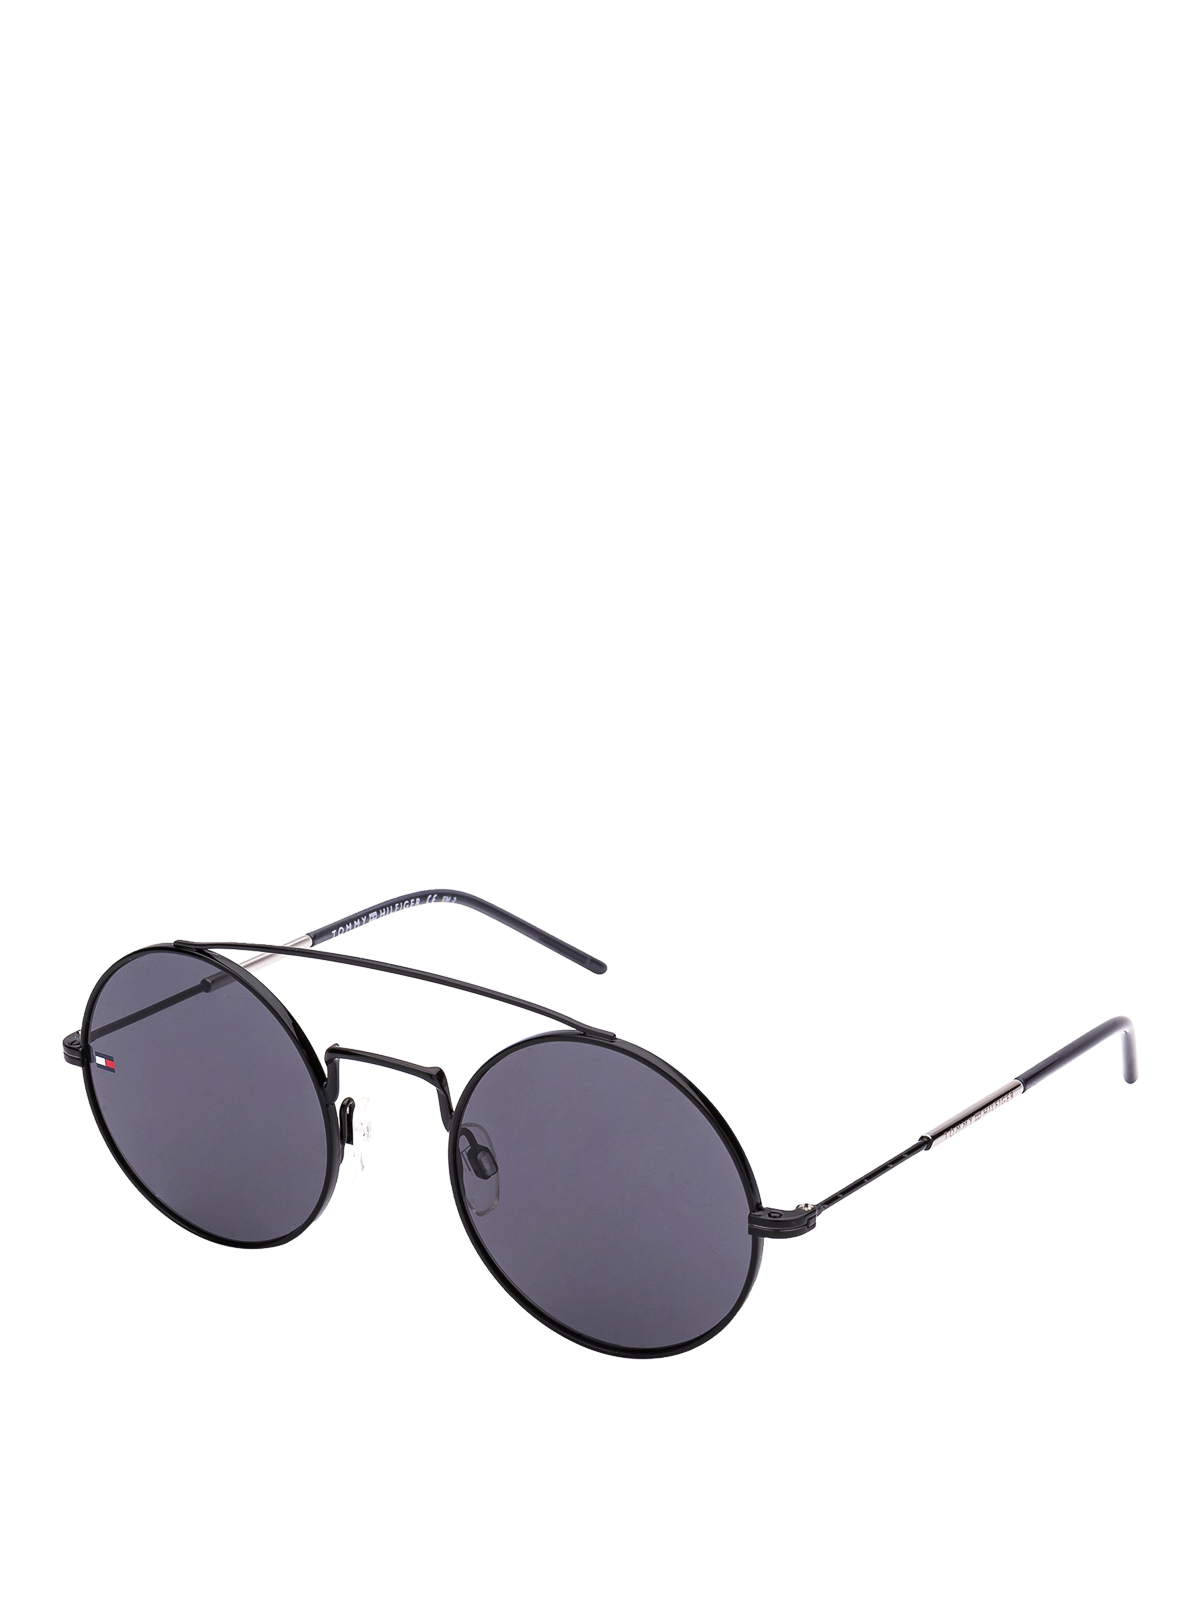 Tommy Hilfiger - Black round sunglasses 